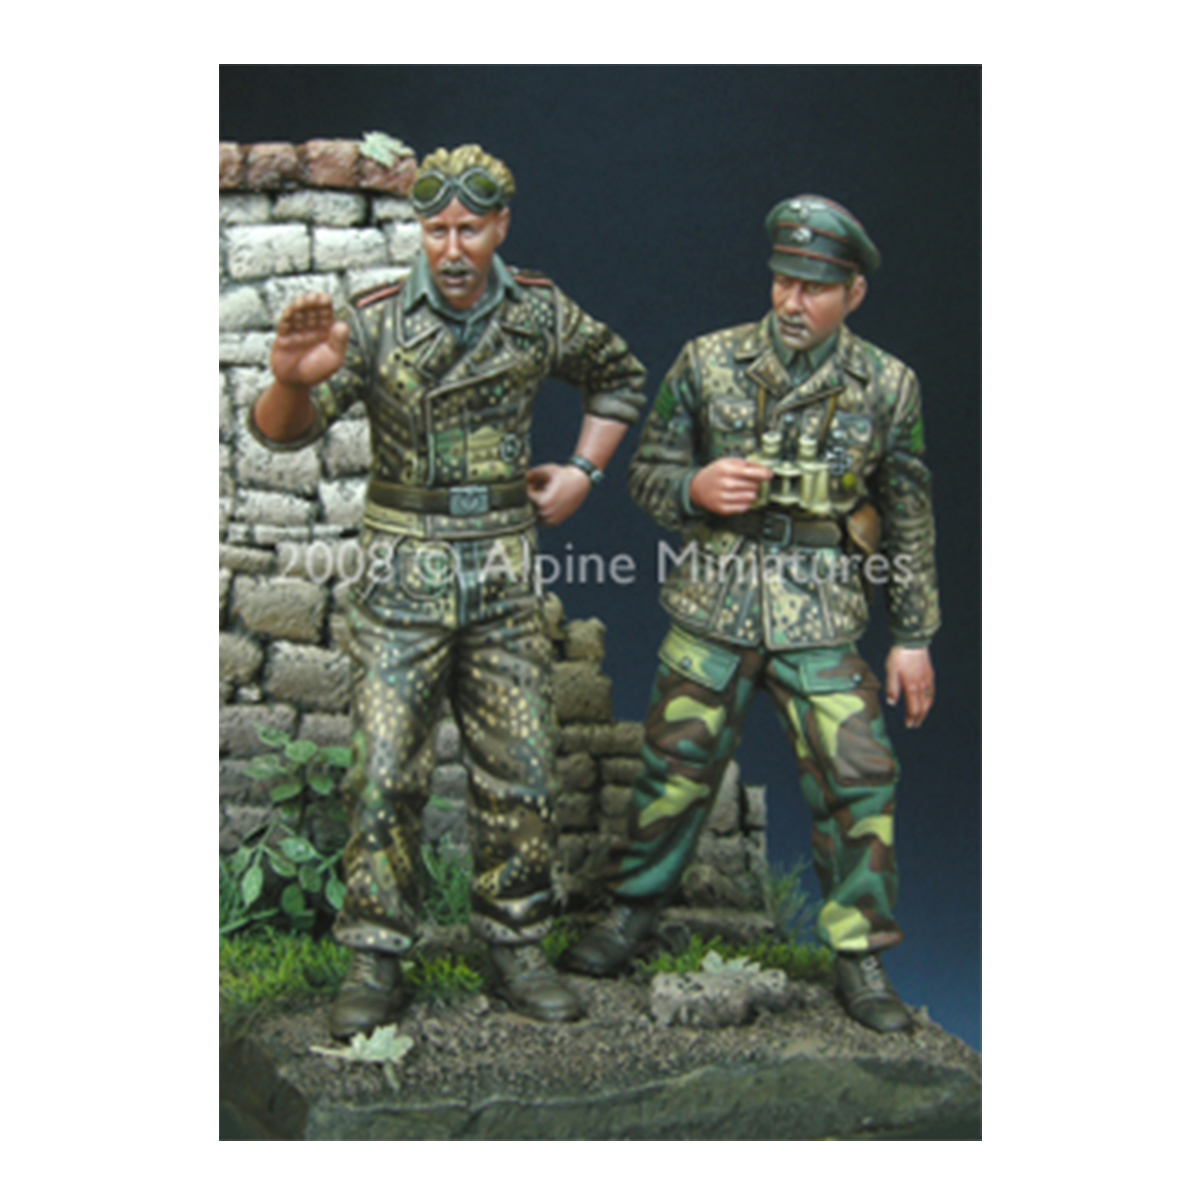 Alpine Miniatures – WSS Panzer Crew Set (2 figs) 1/35